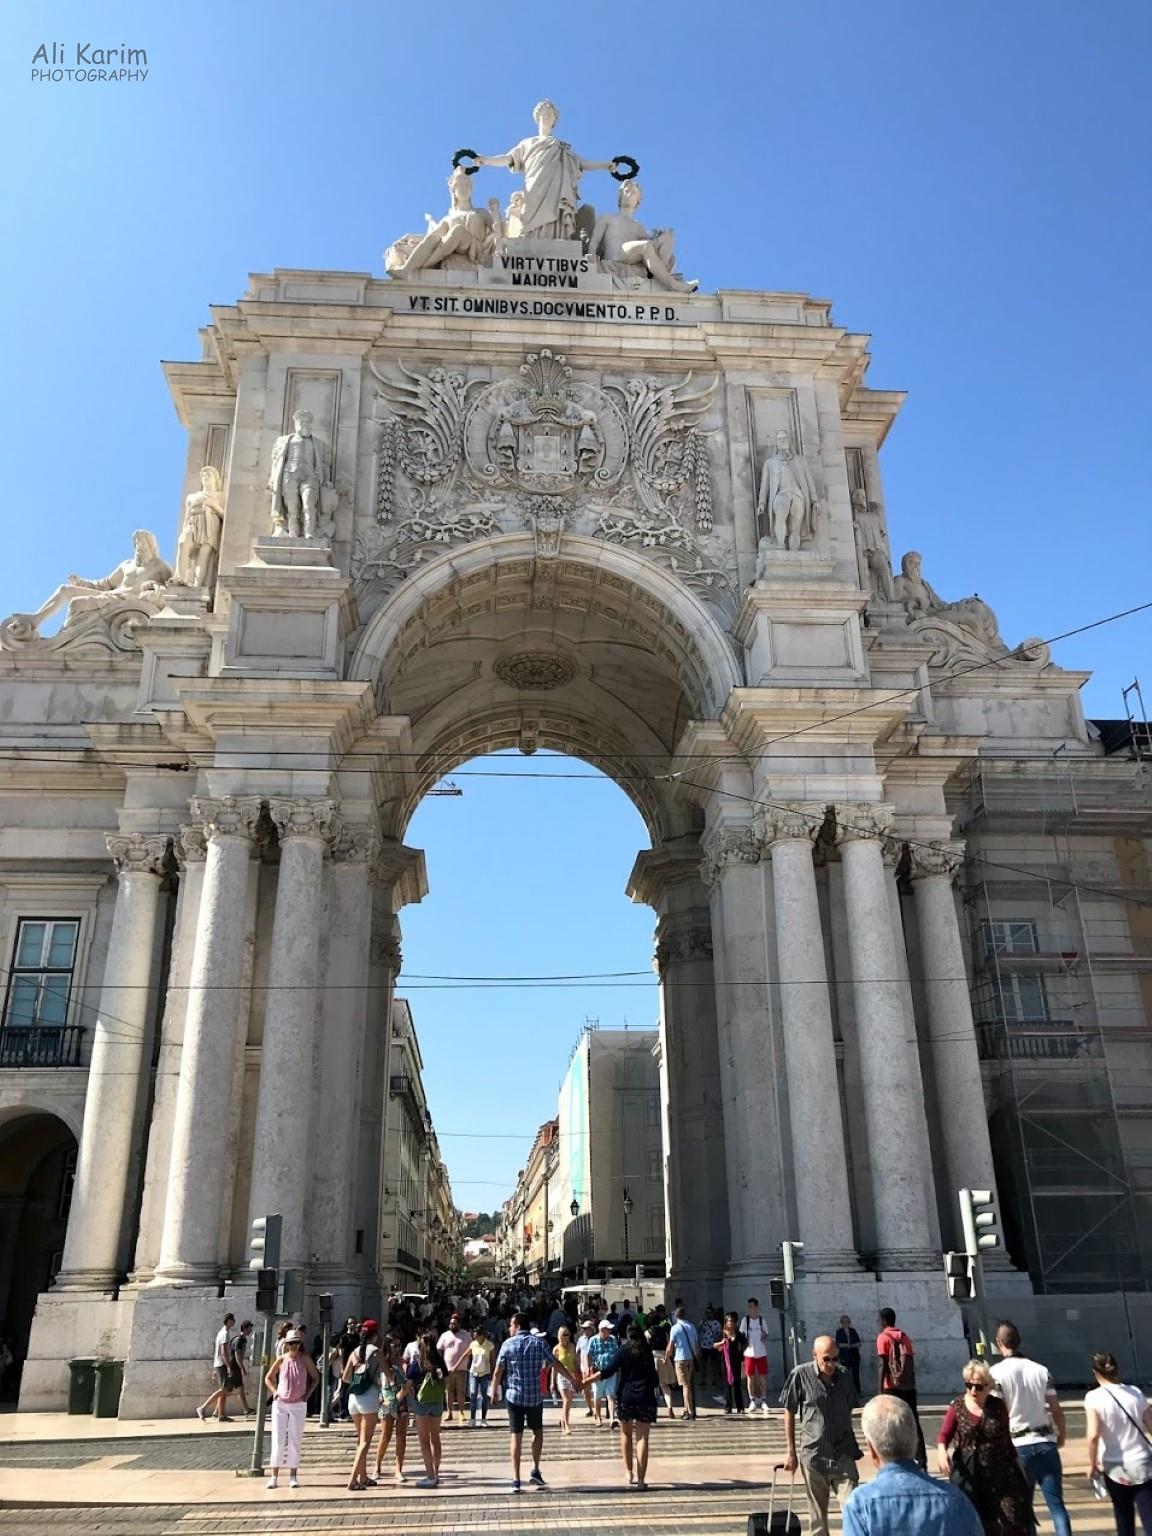 Archway into the old City, Praca do Commercio, close to where I had damaged my camera